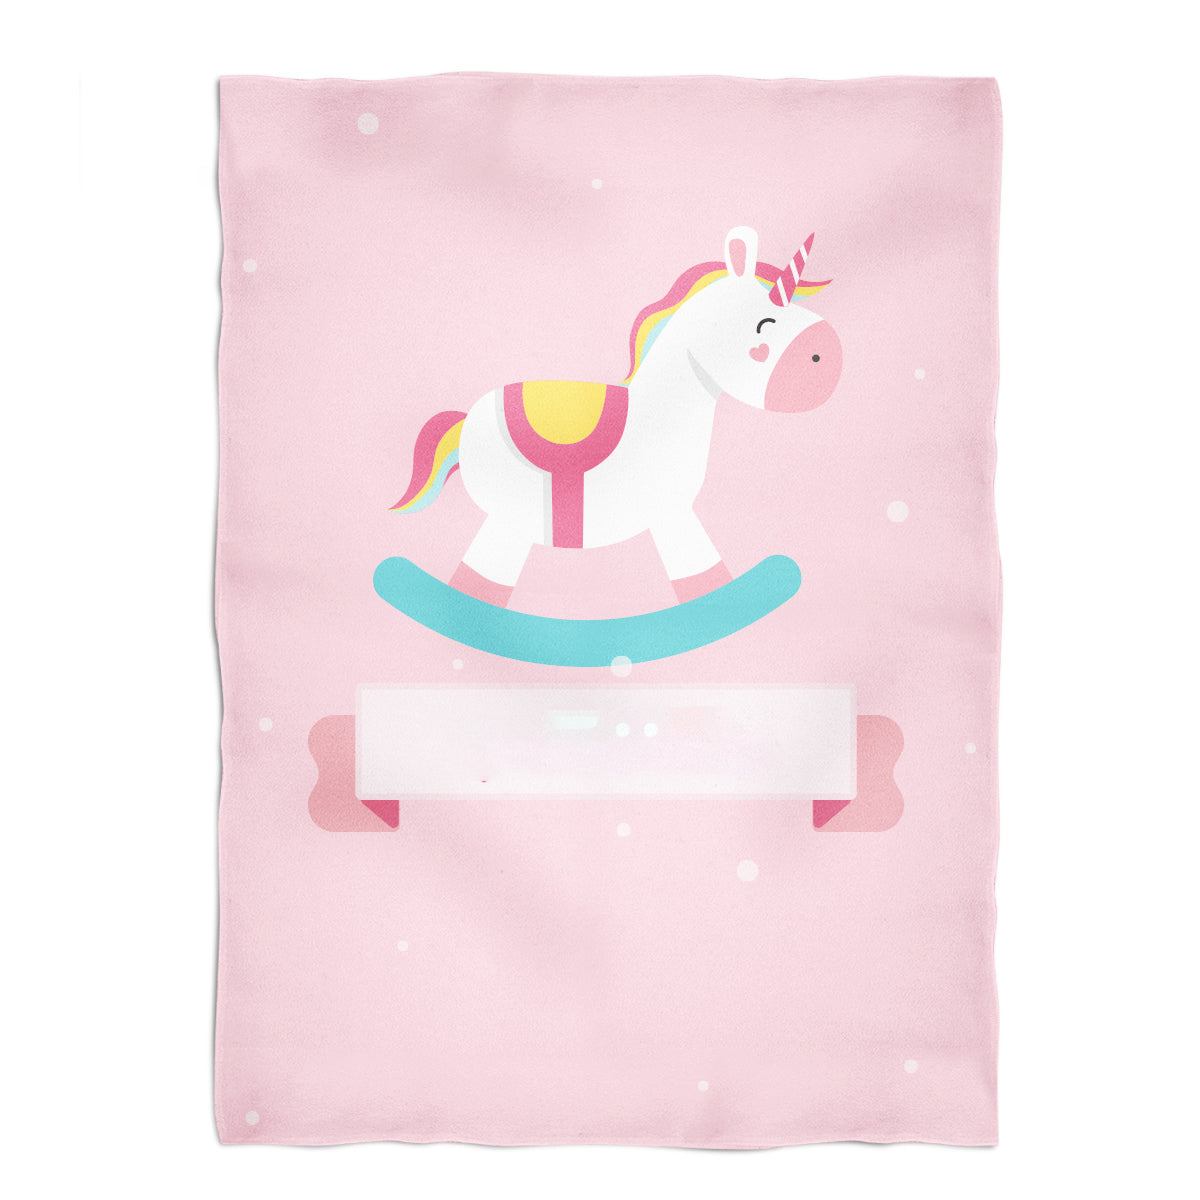 Unicorn name pink minky blanket - Wimziy&Co.